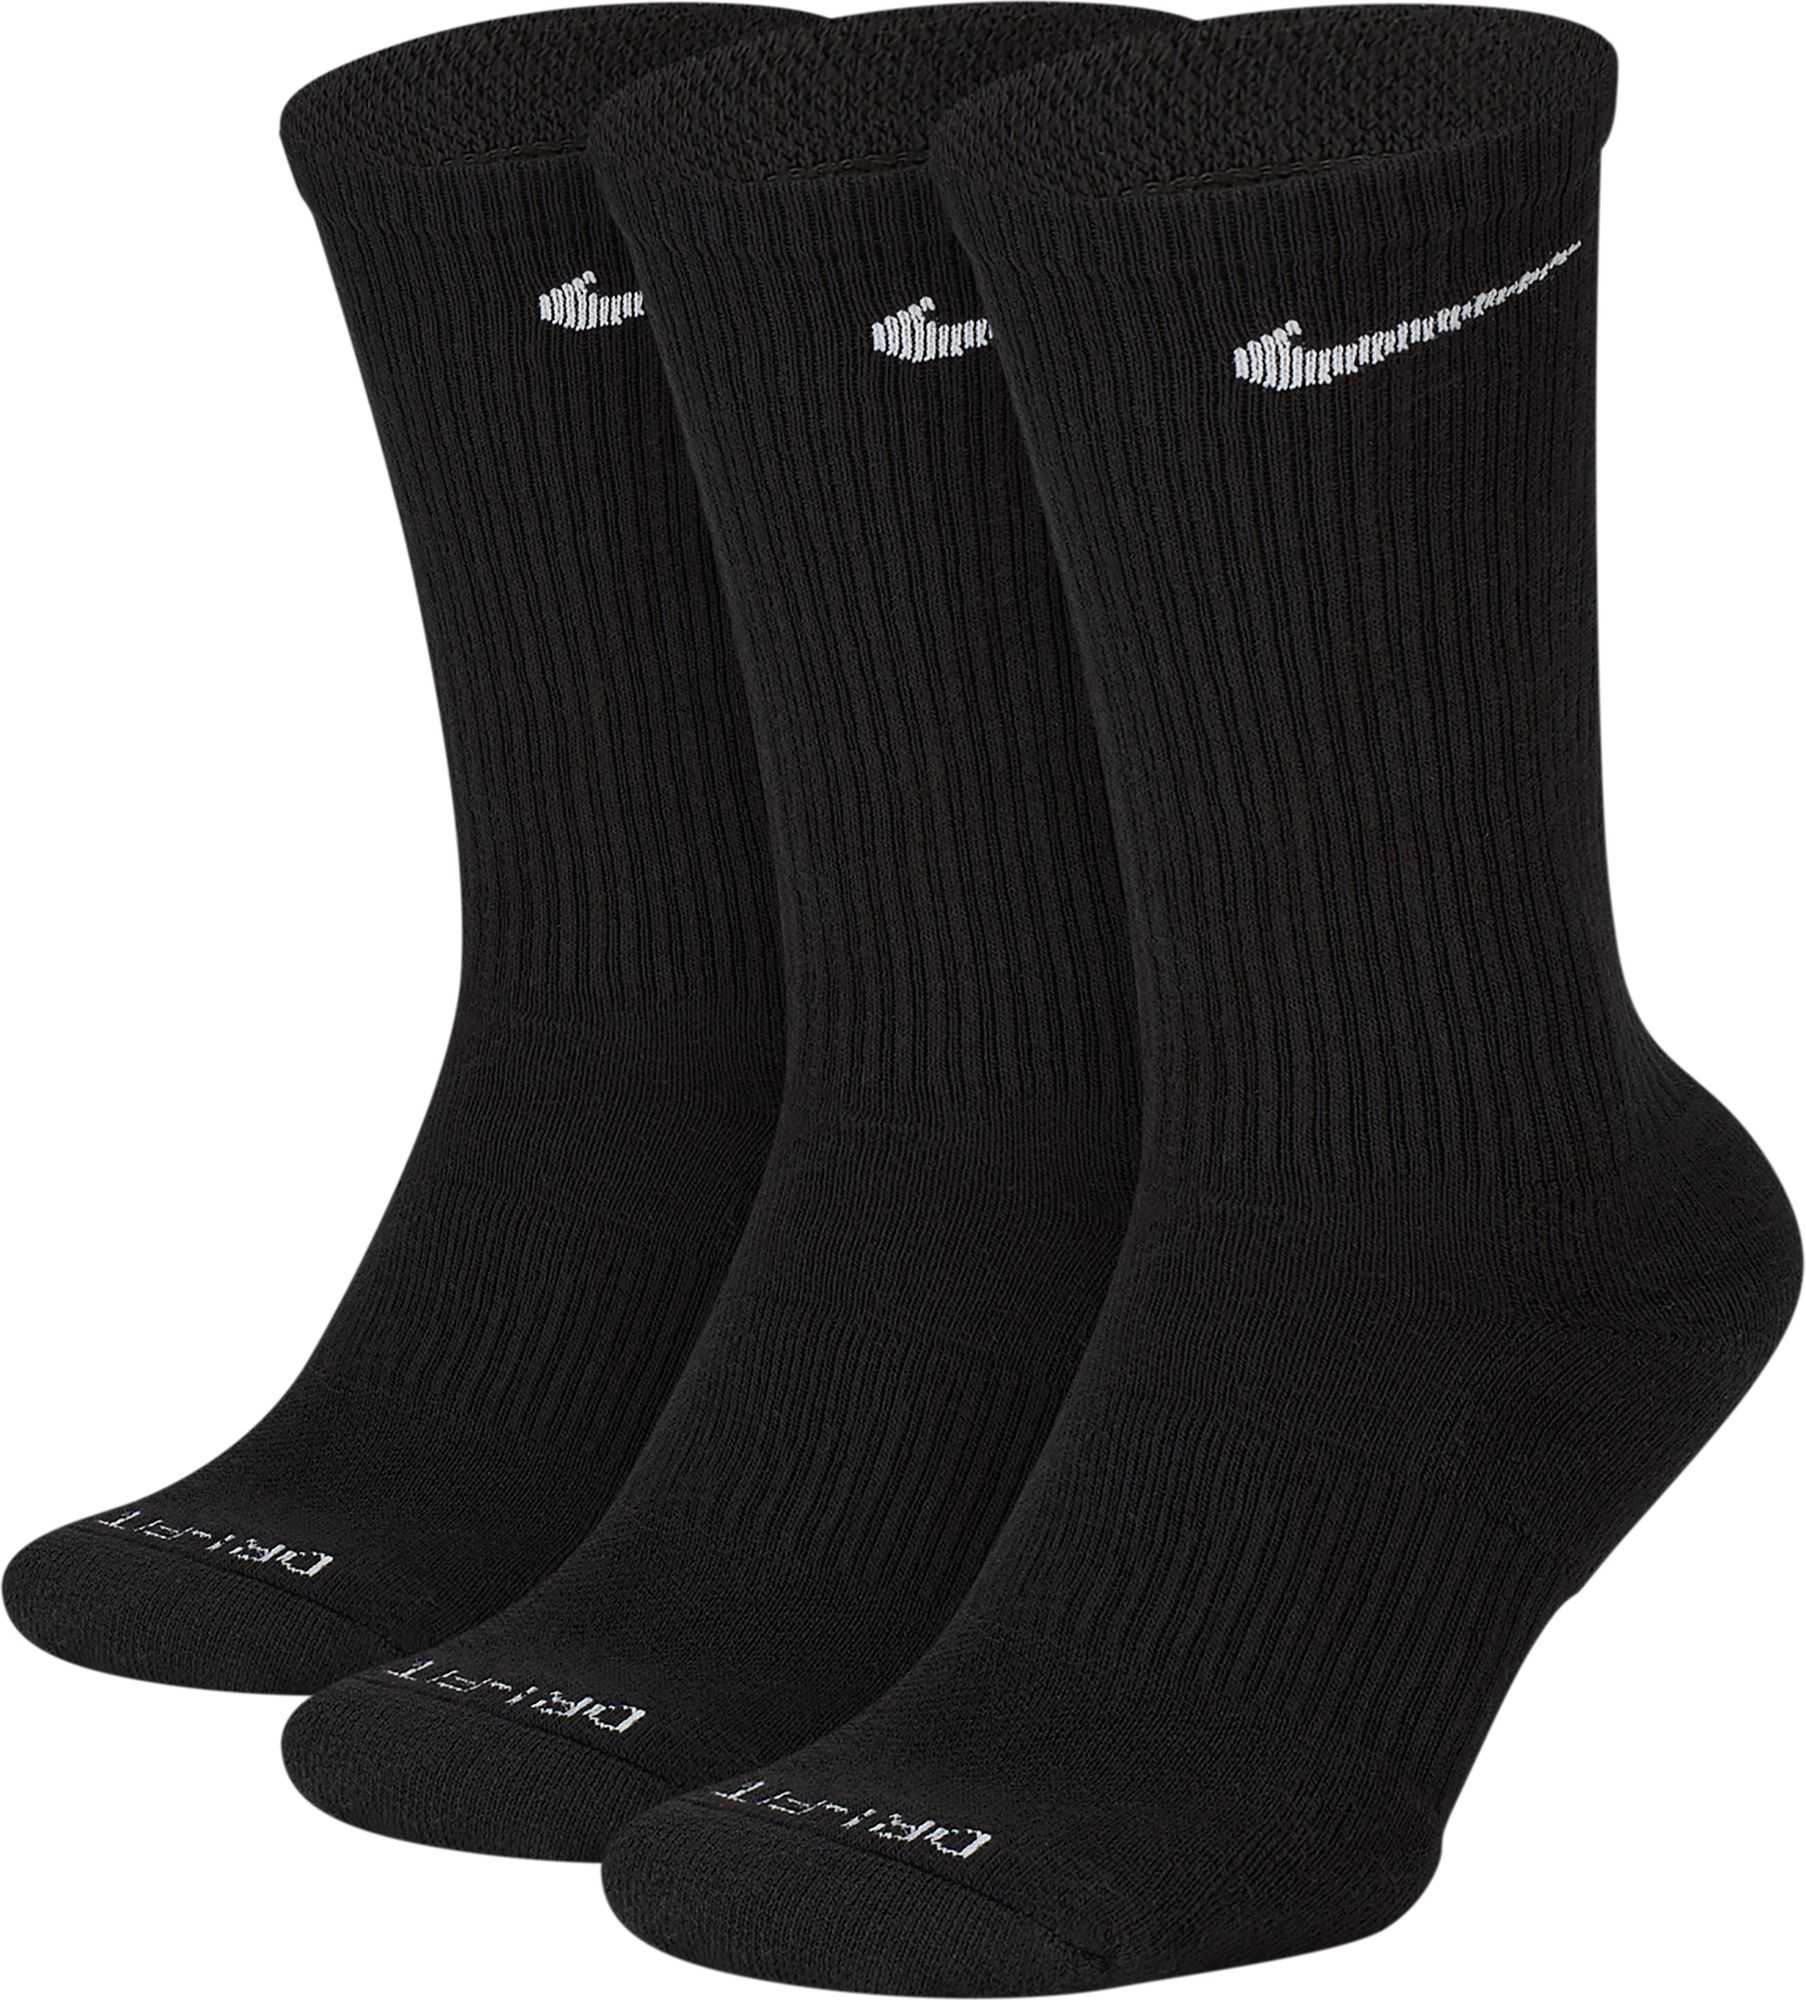 Nike Everyday Plus Cushion Crew Socks - 3 Pack, Men's, Large, Black